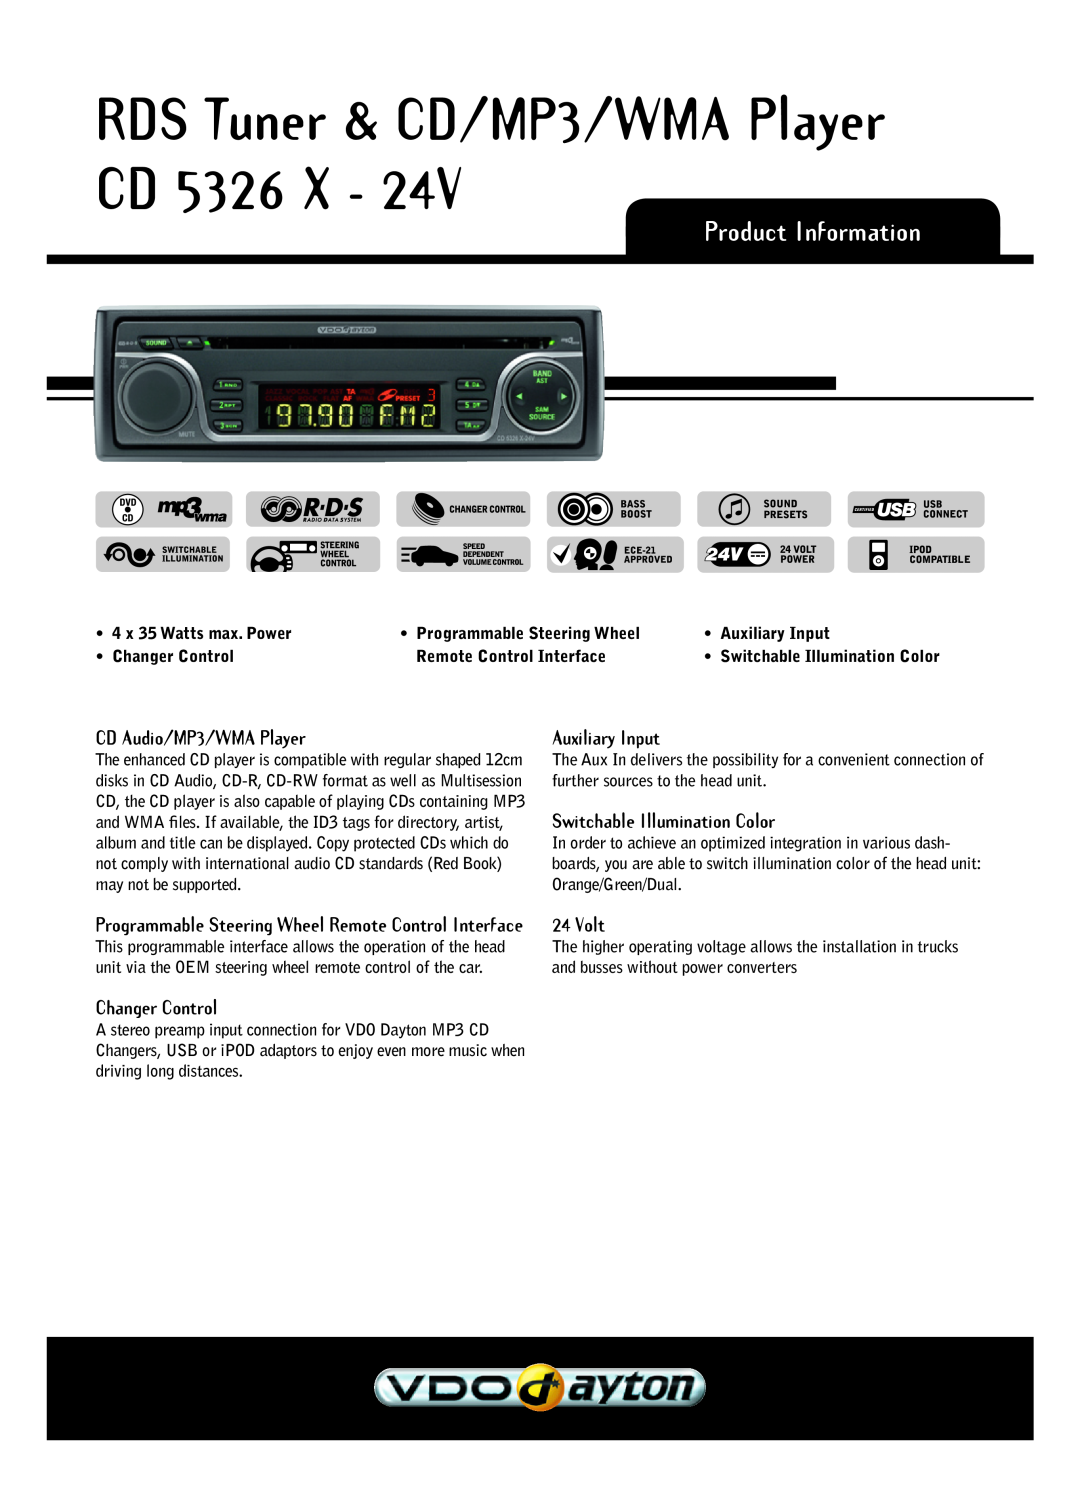 VDO Dayton CD 5326 X - 24V manual RDS Tuner & CD/MP3/WMA Player CD 5326 X, Product Information, CD Audio/MP3/WMA Player 